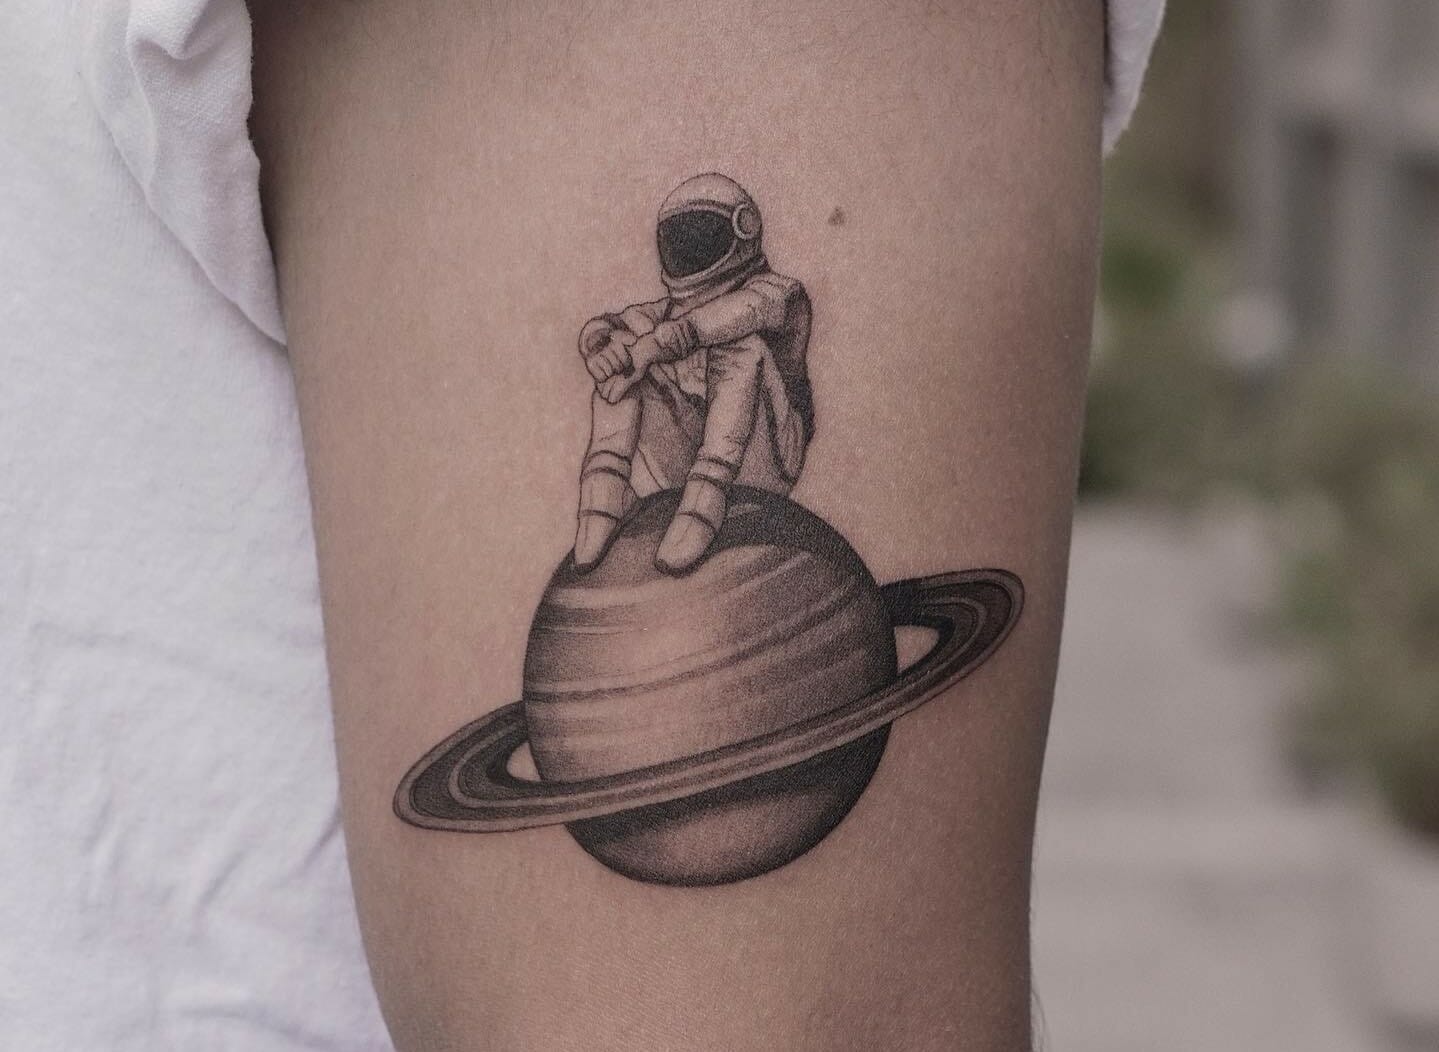 30 Creative Astronaut Tattoo Ideas  Art and Design  Astronaut tattoo  Tattoos with meaning Ink tattoo